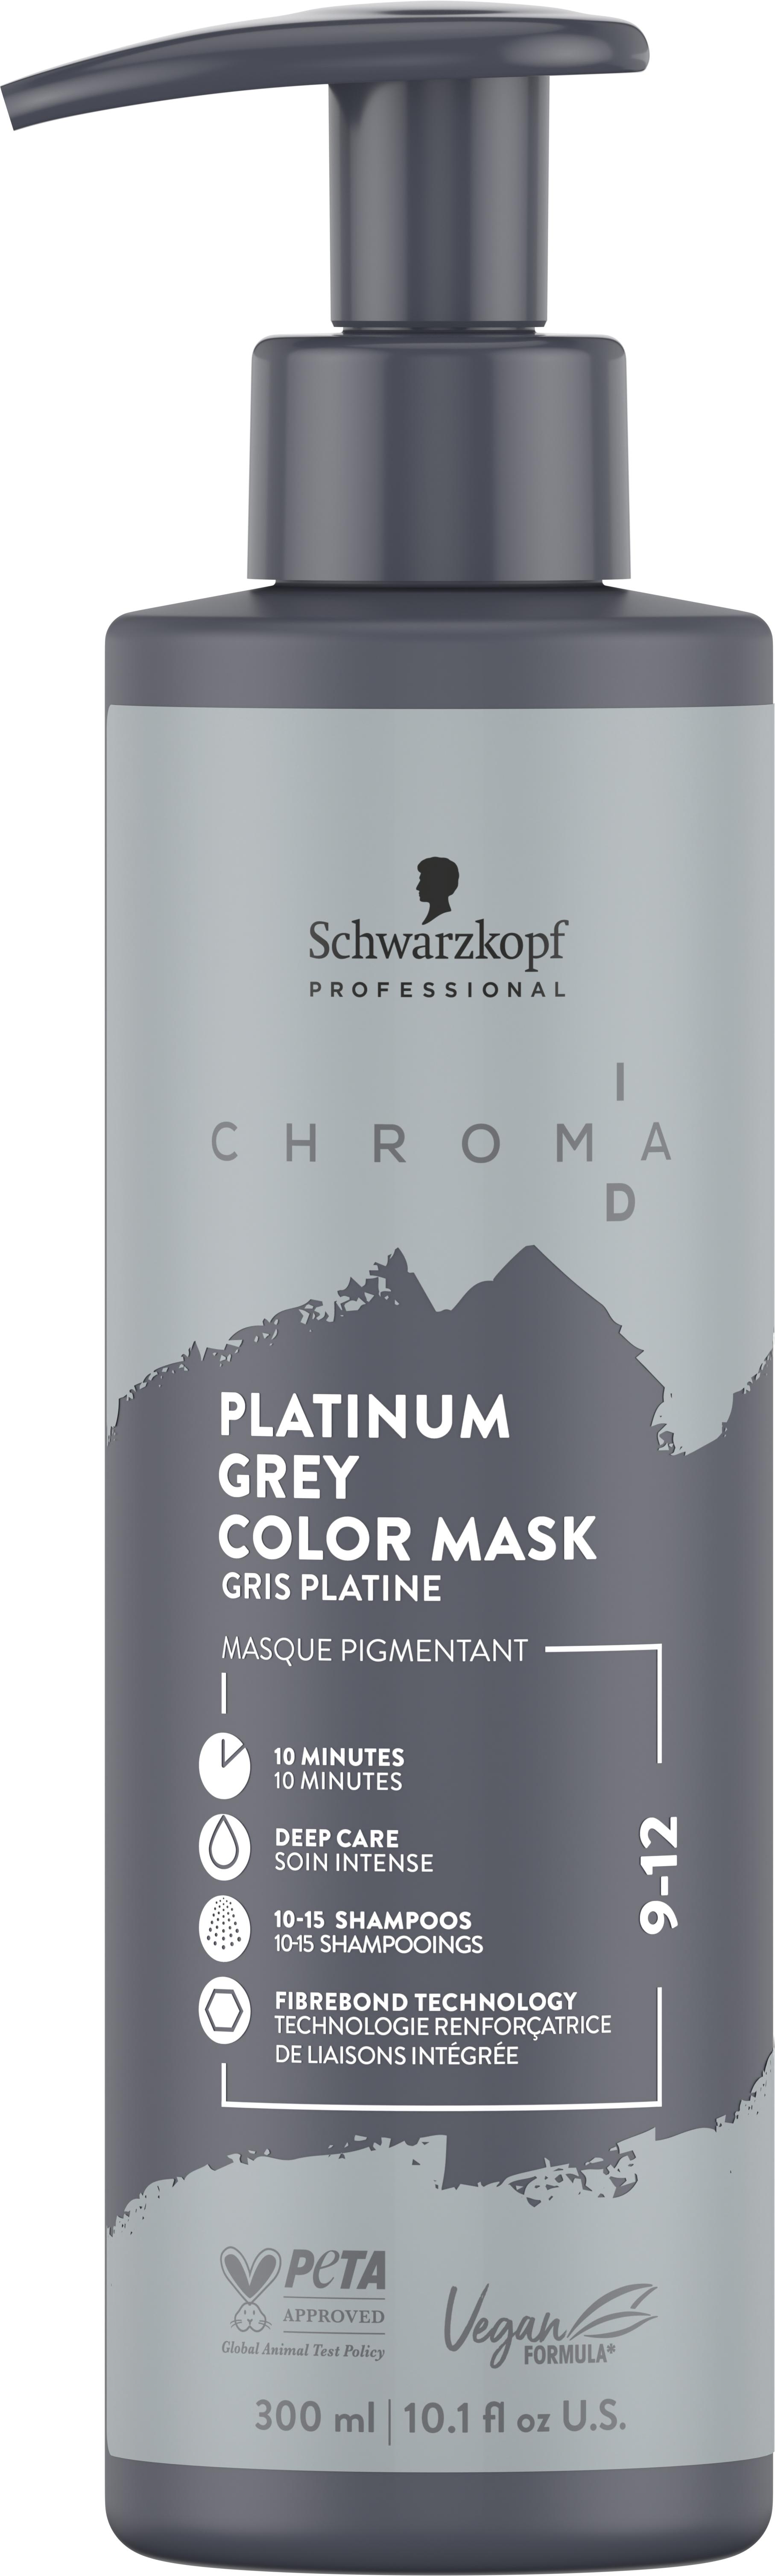 Chroma ID - Bonding Color Mask 9-12 Platinum Grey